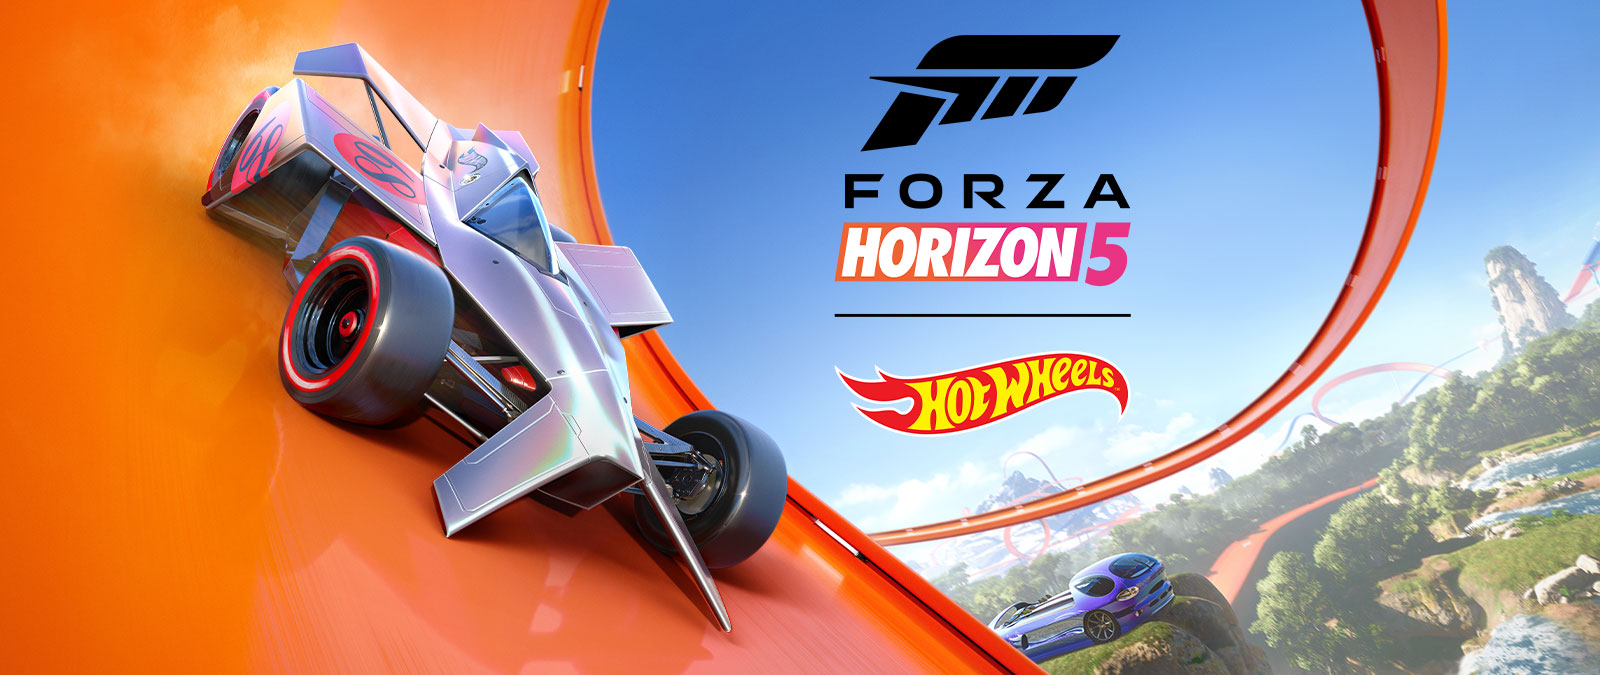 Forza Horizon 5, Hot Wheels, samochód ściga się po pętli toru Hot Wheels.